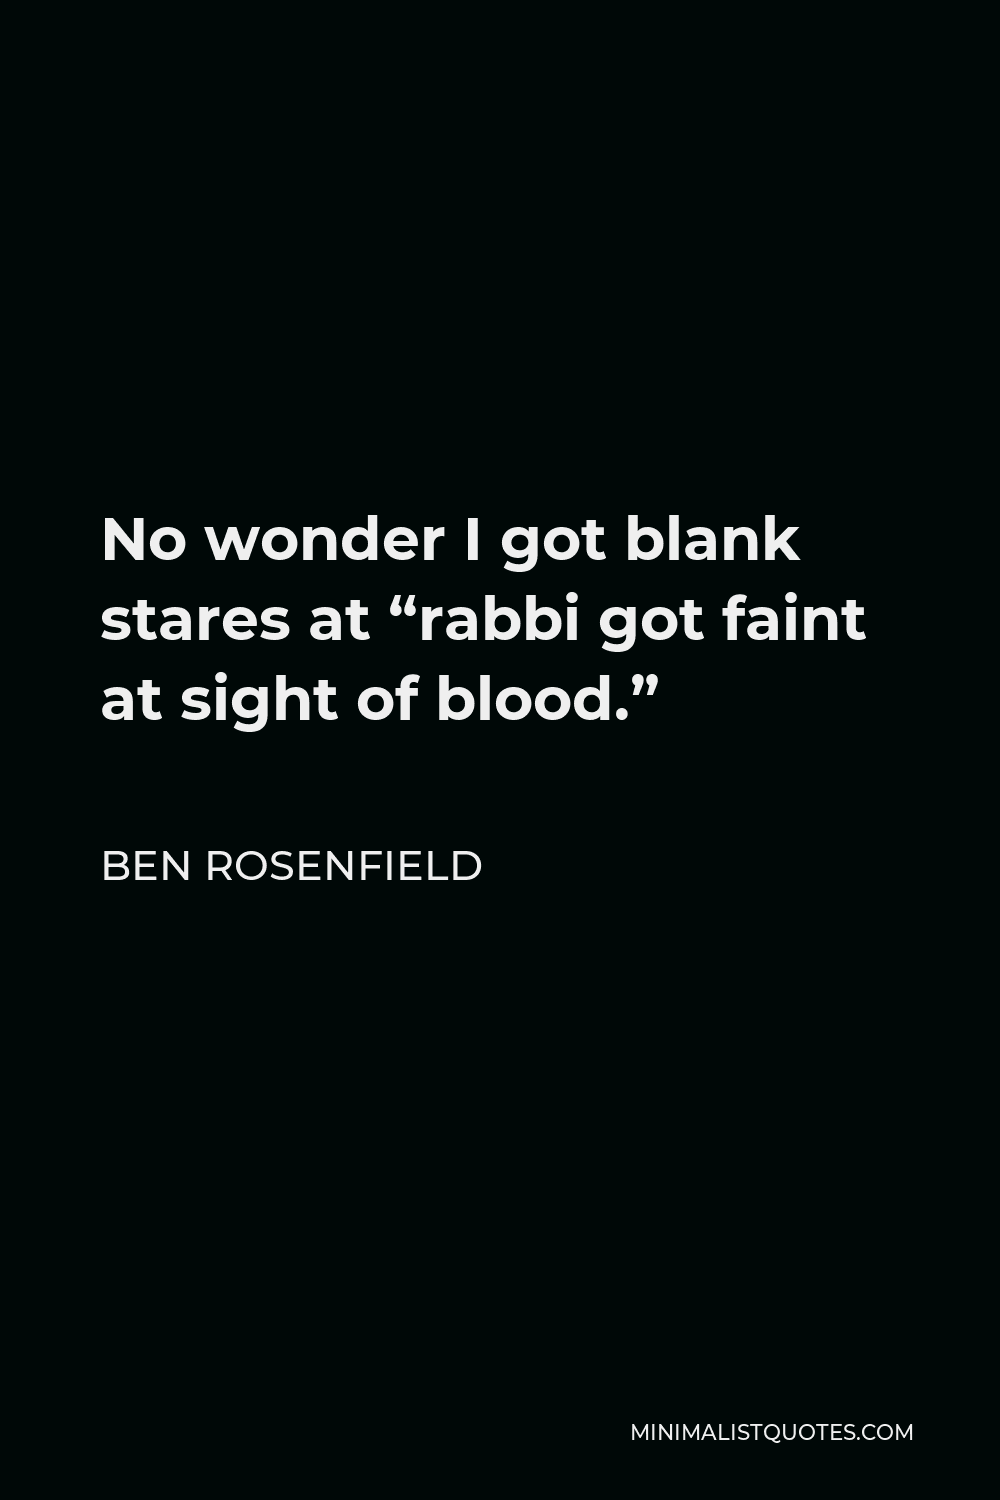 Ben Rosenfield Quote - No wonder I got blank stares at “rabbi got faint at sight of blood.”